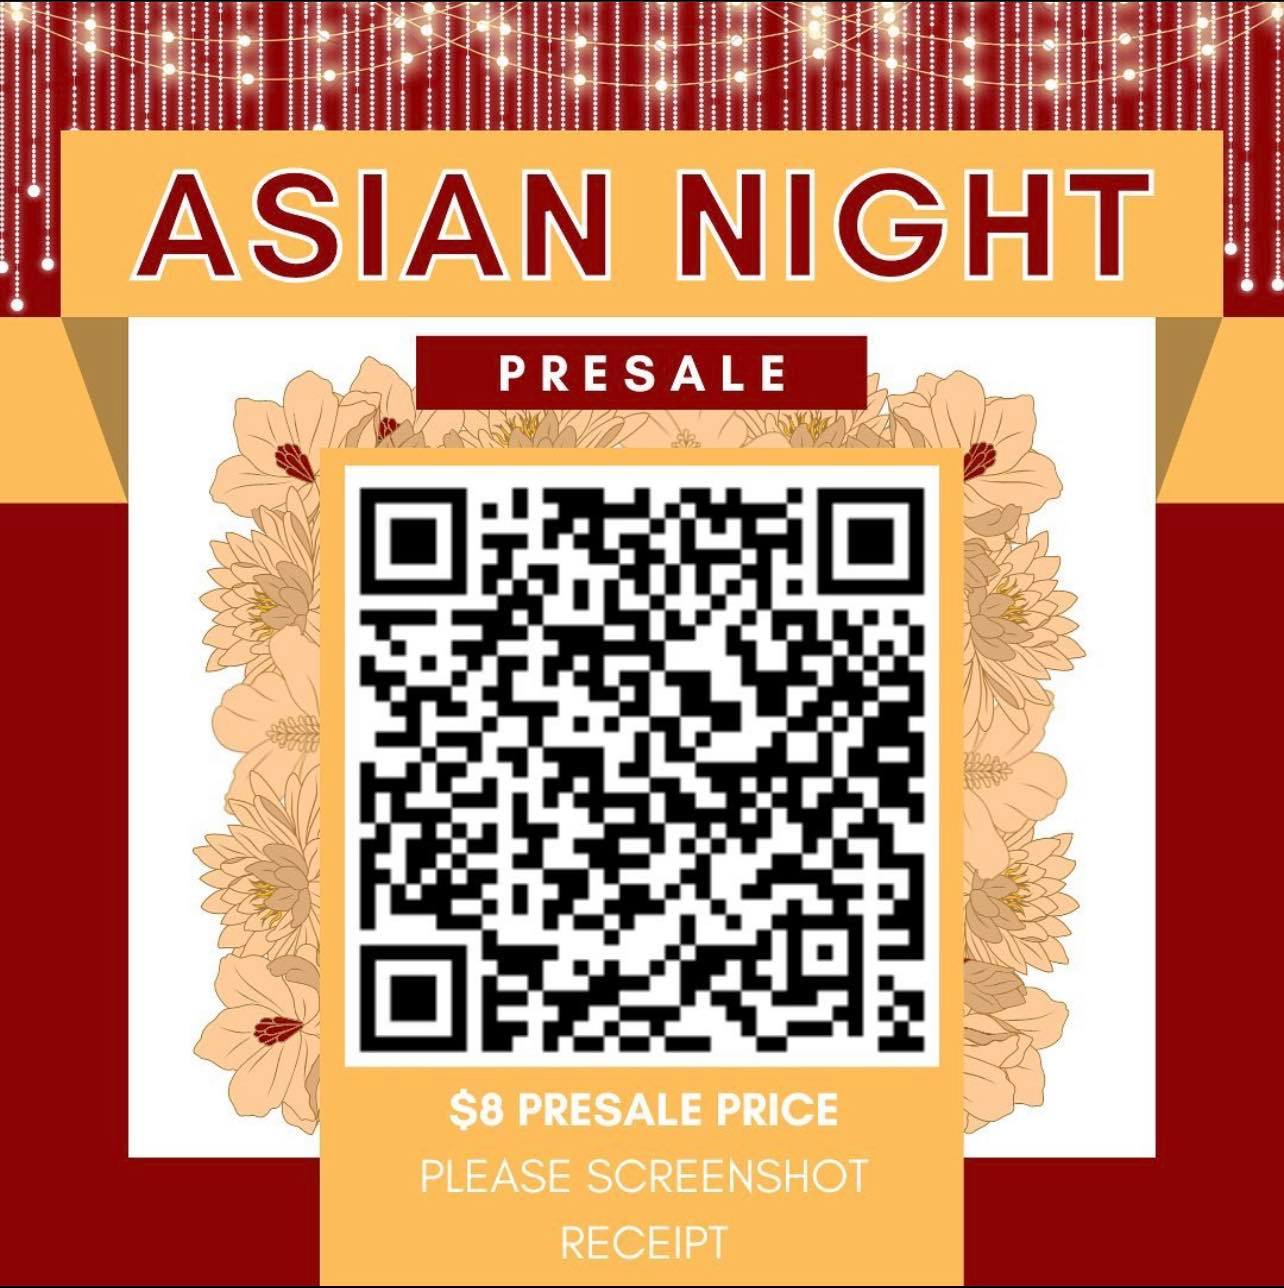 UHS Asian Night 2023